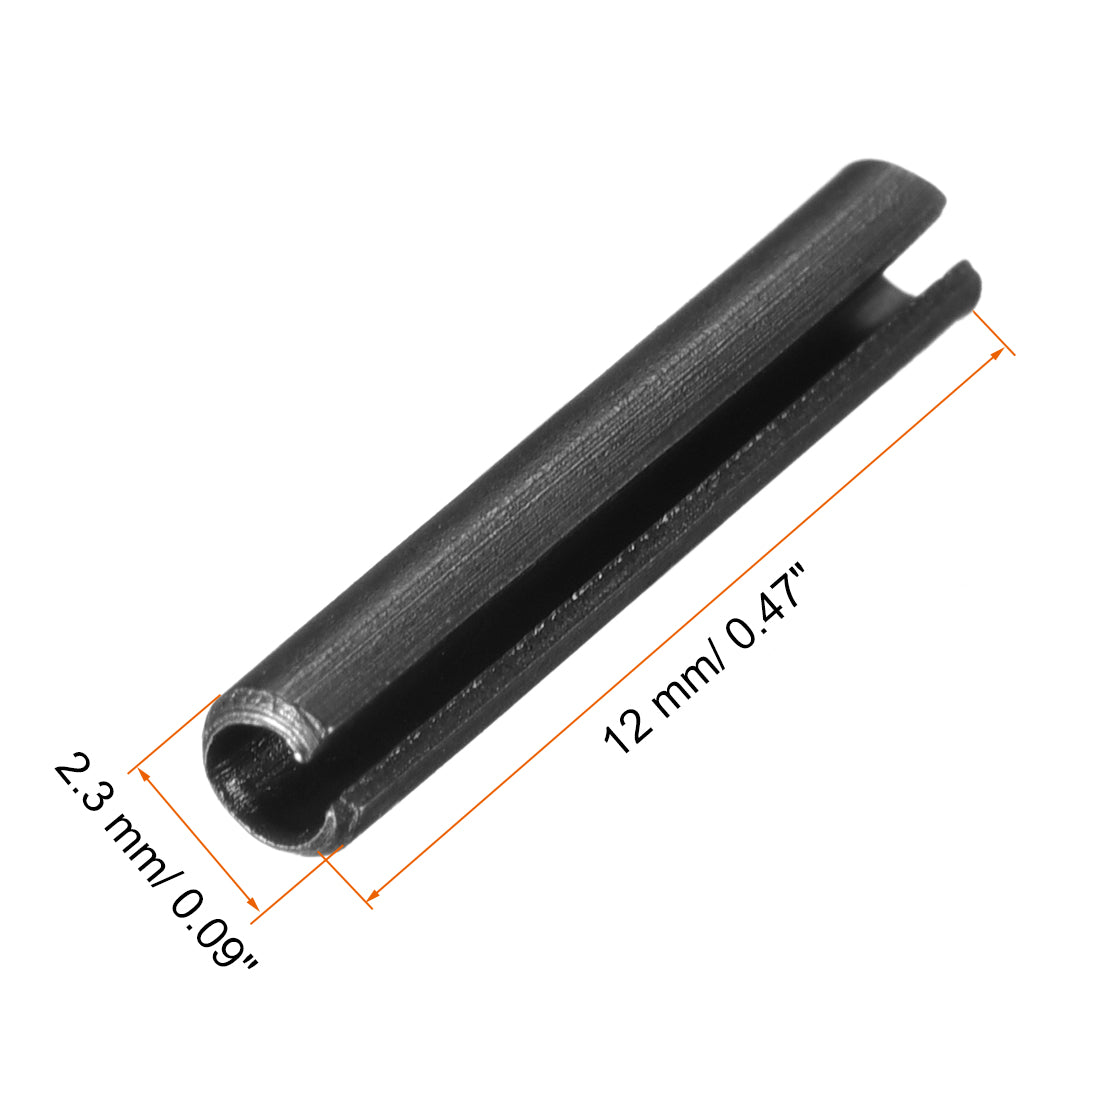 uxcell Uxcell 2.3mm x 12mm Dowel Pin Carbon Steel Split Spring Roll Shelf Support Pin Fasten Hardware Black 30 Pcs